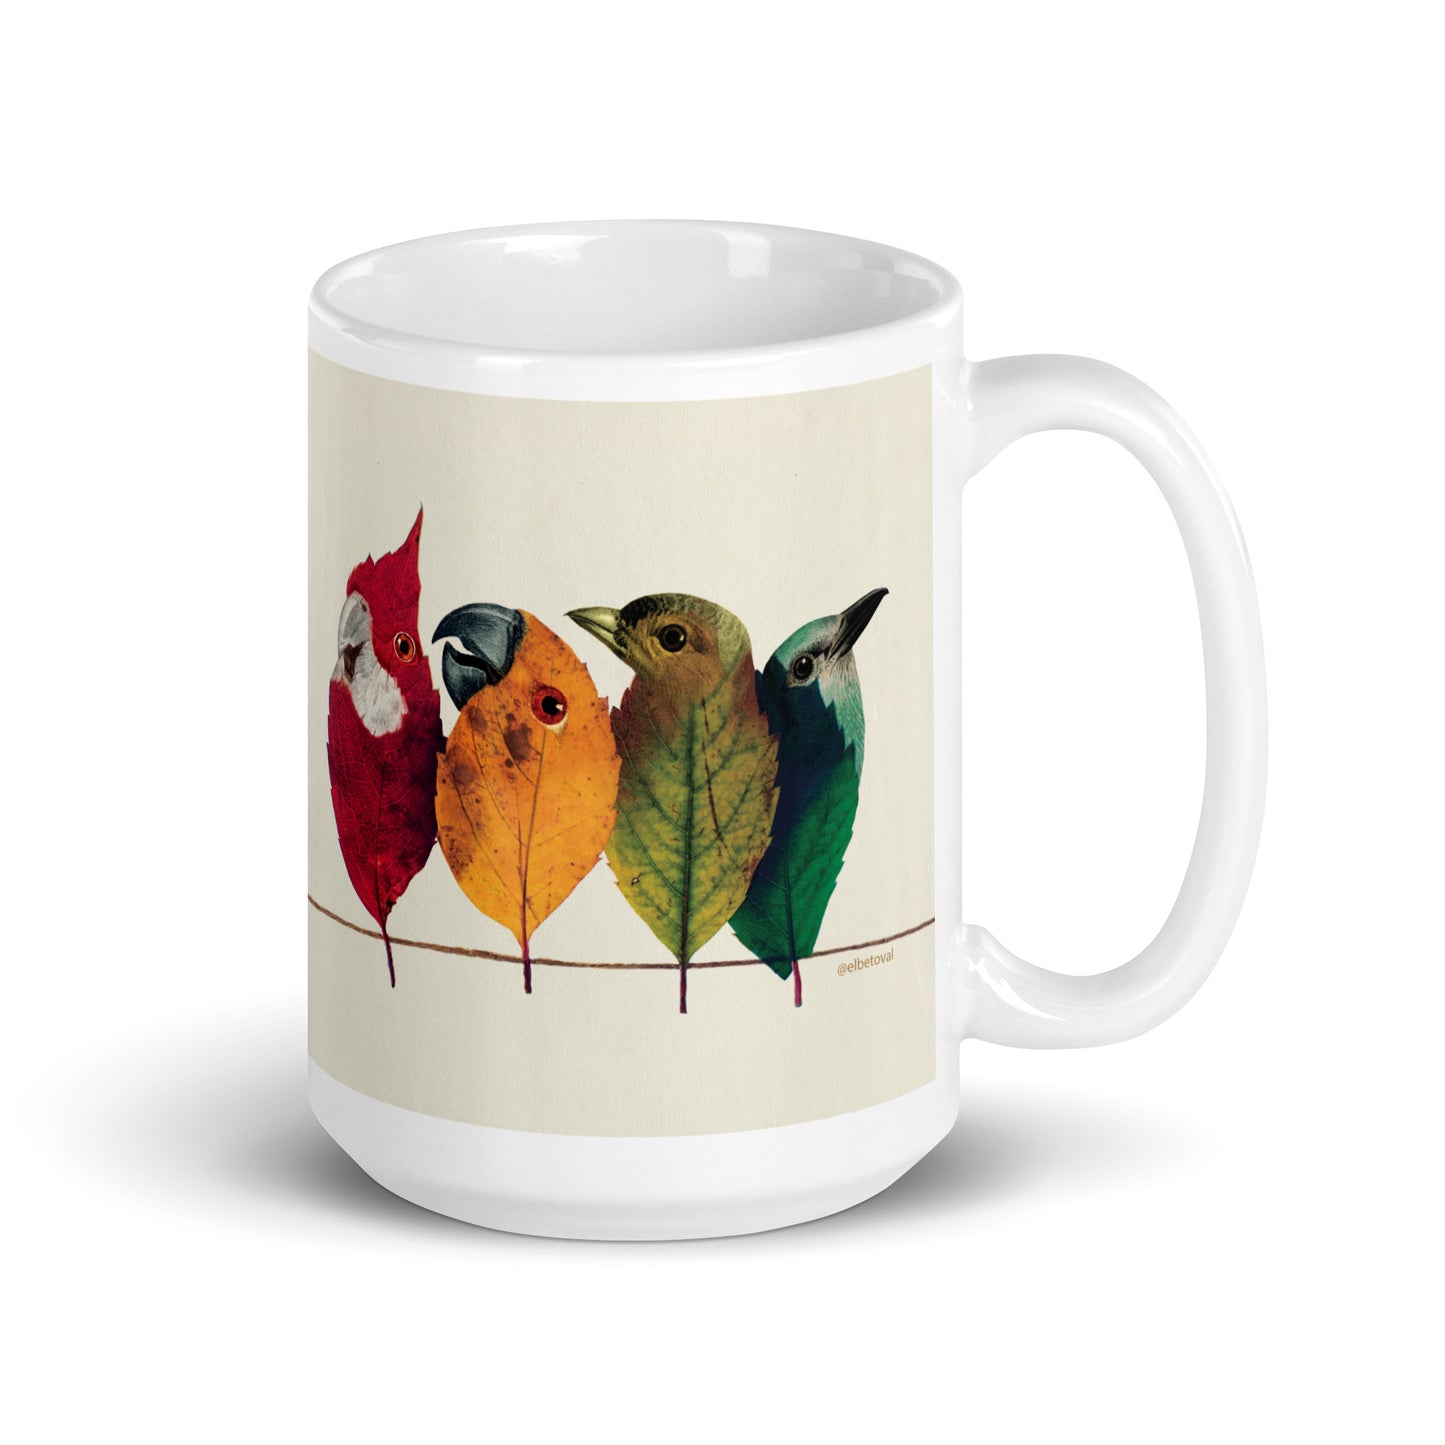 Birds on the wire mug